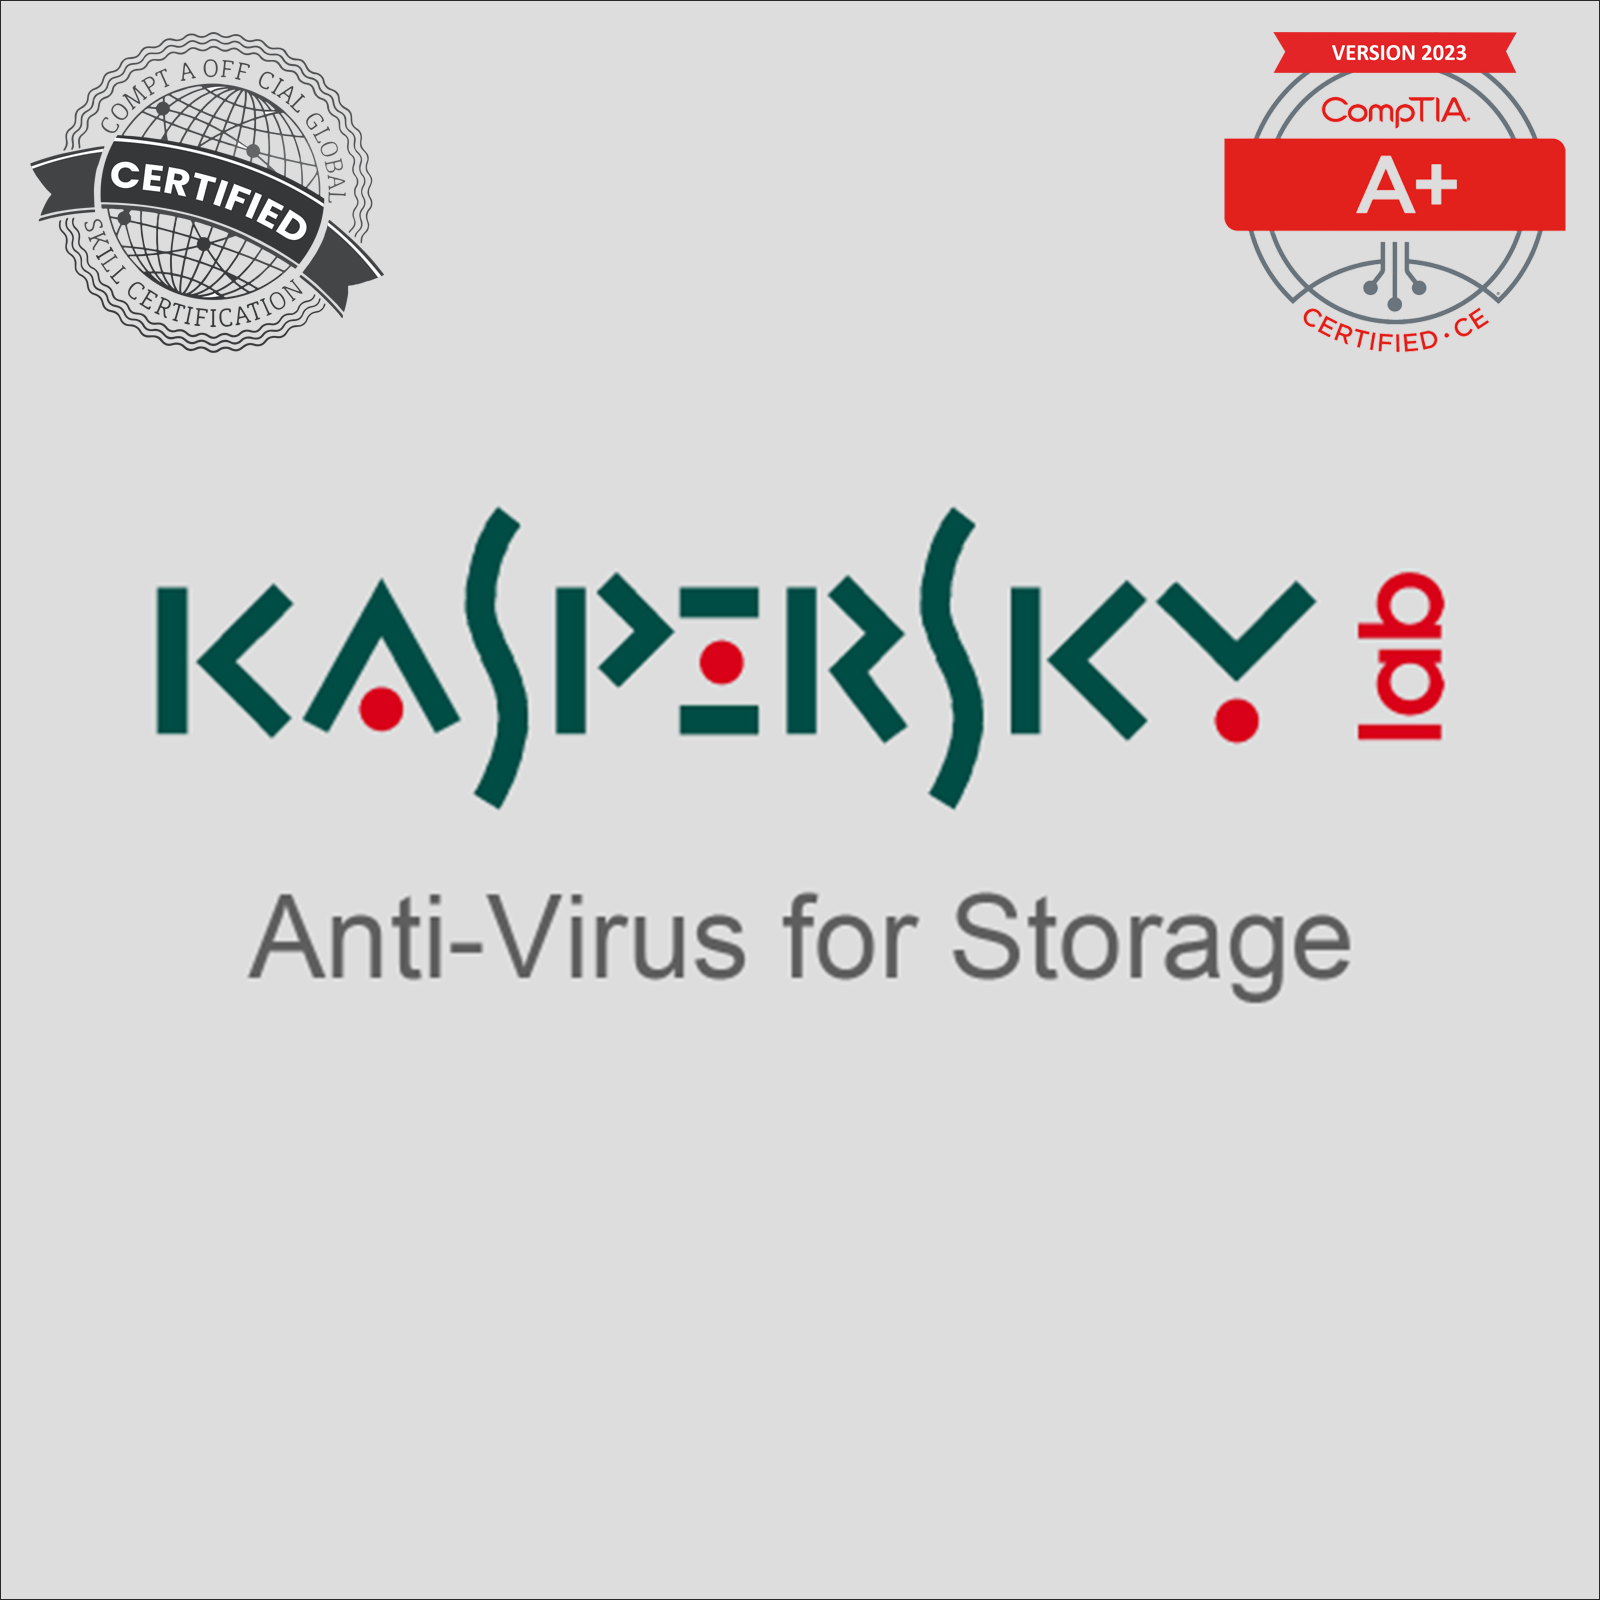 Kaspersky Anti-Virus for Storage - EDU - Renewal - 3-Year / 20-24 Seats (Band N)